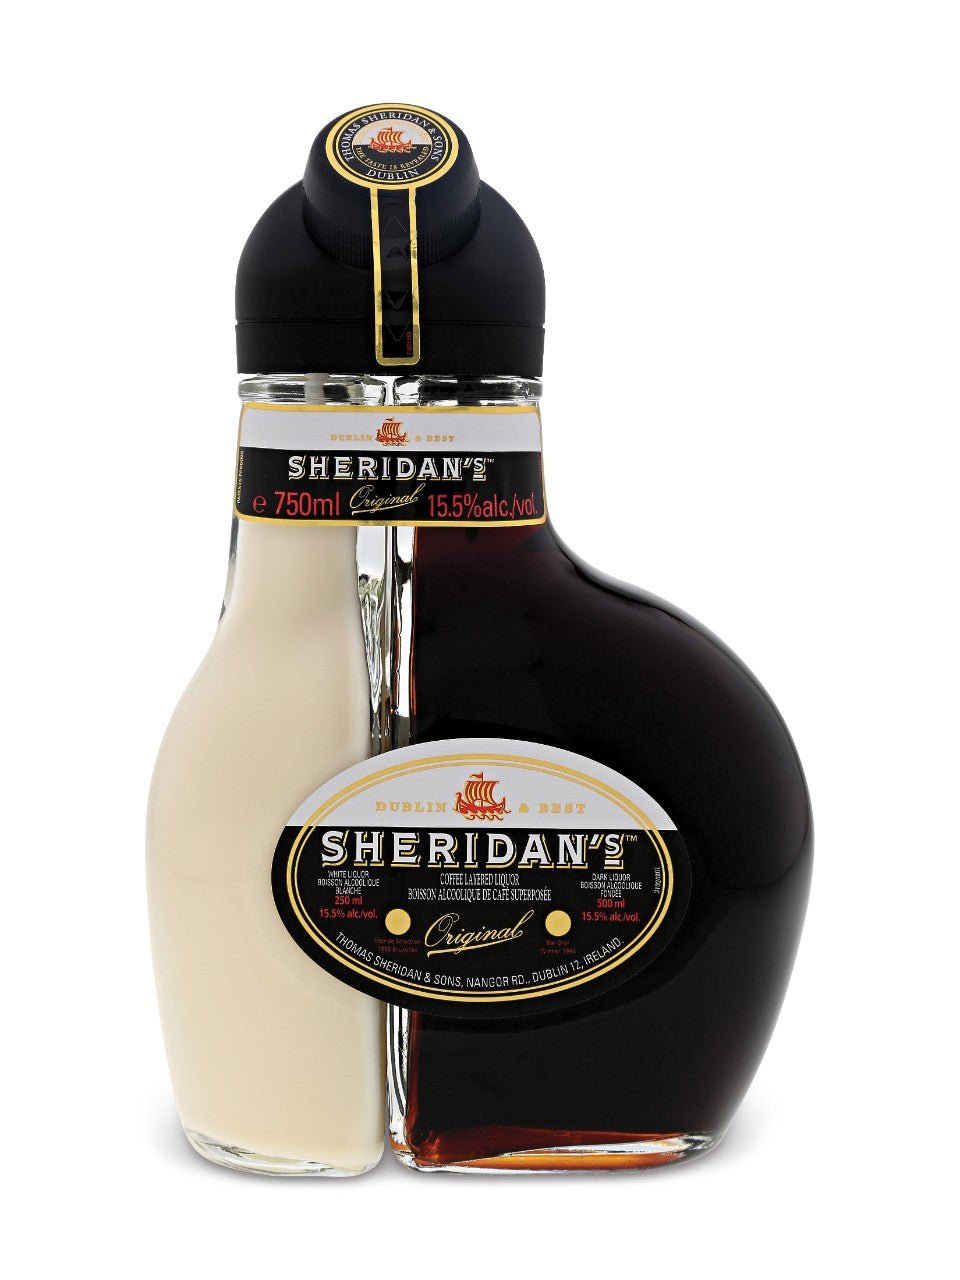 Sheridan's Original Double Liquor